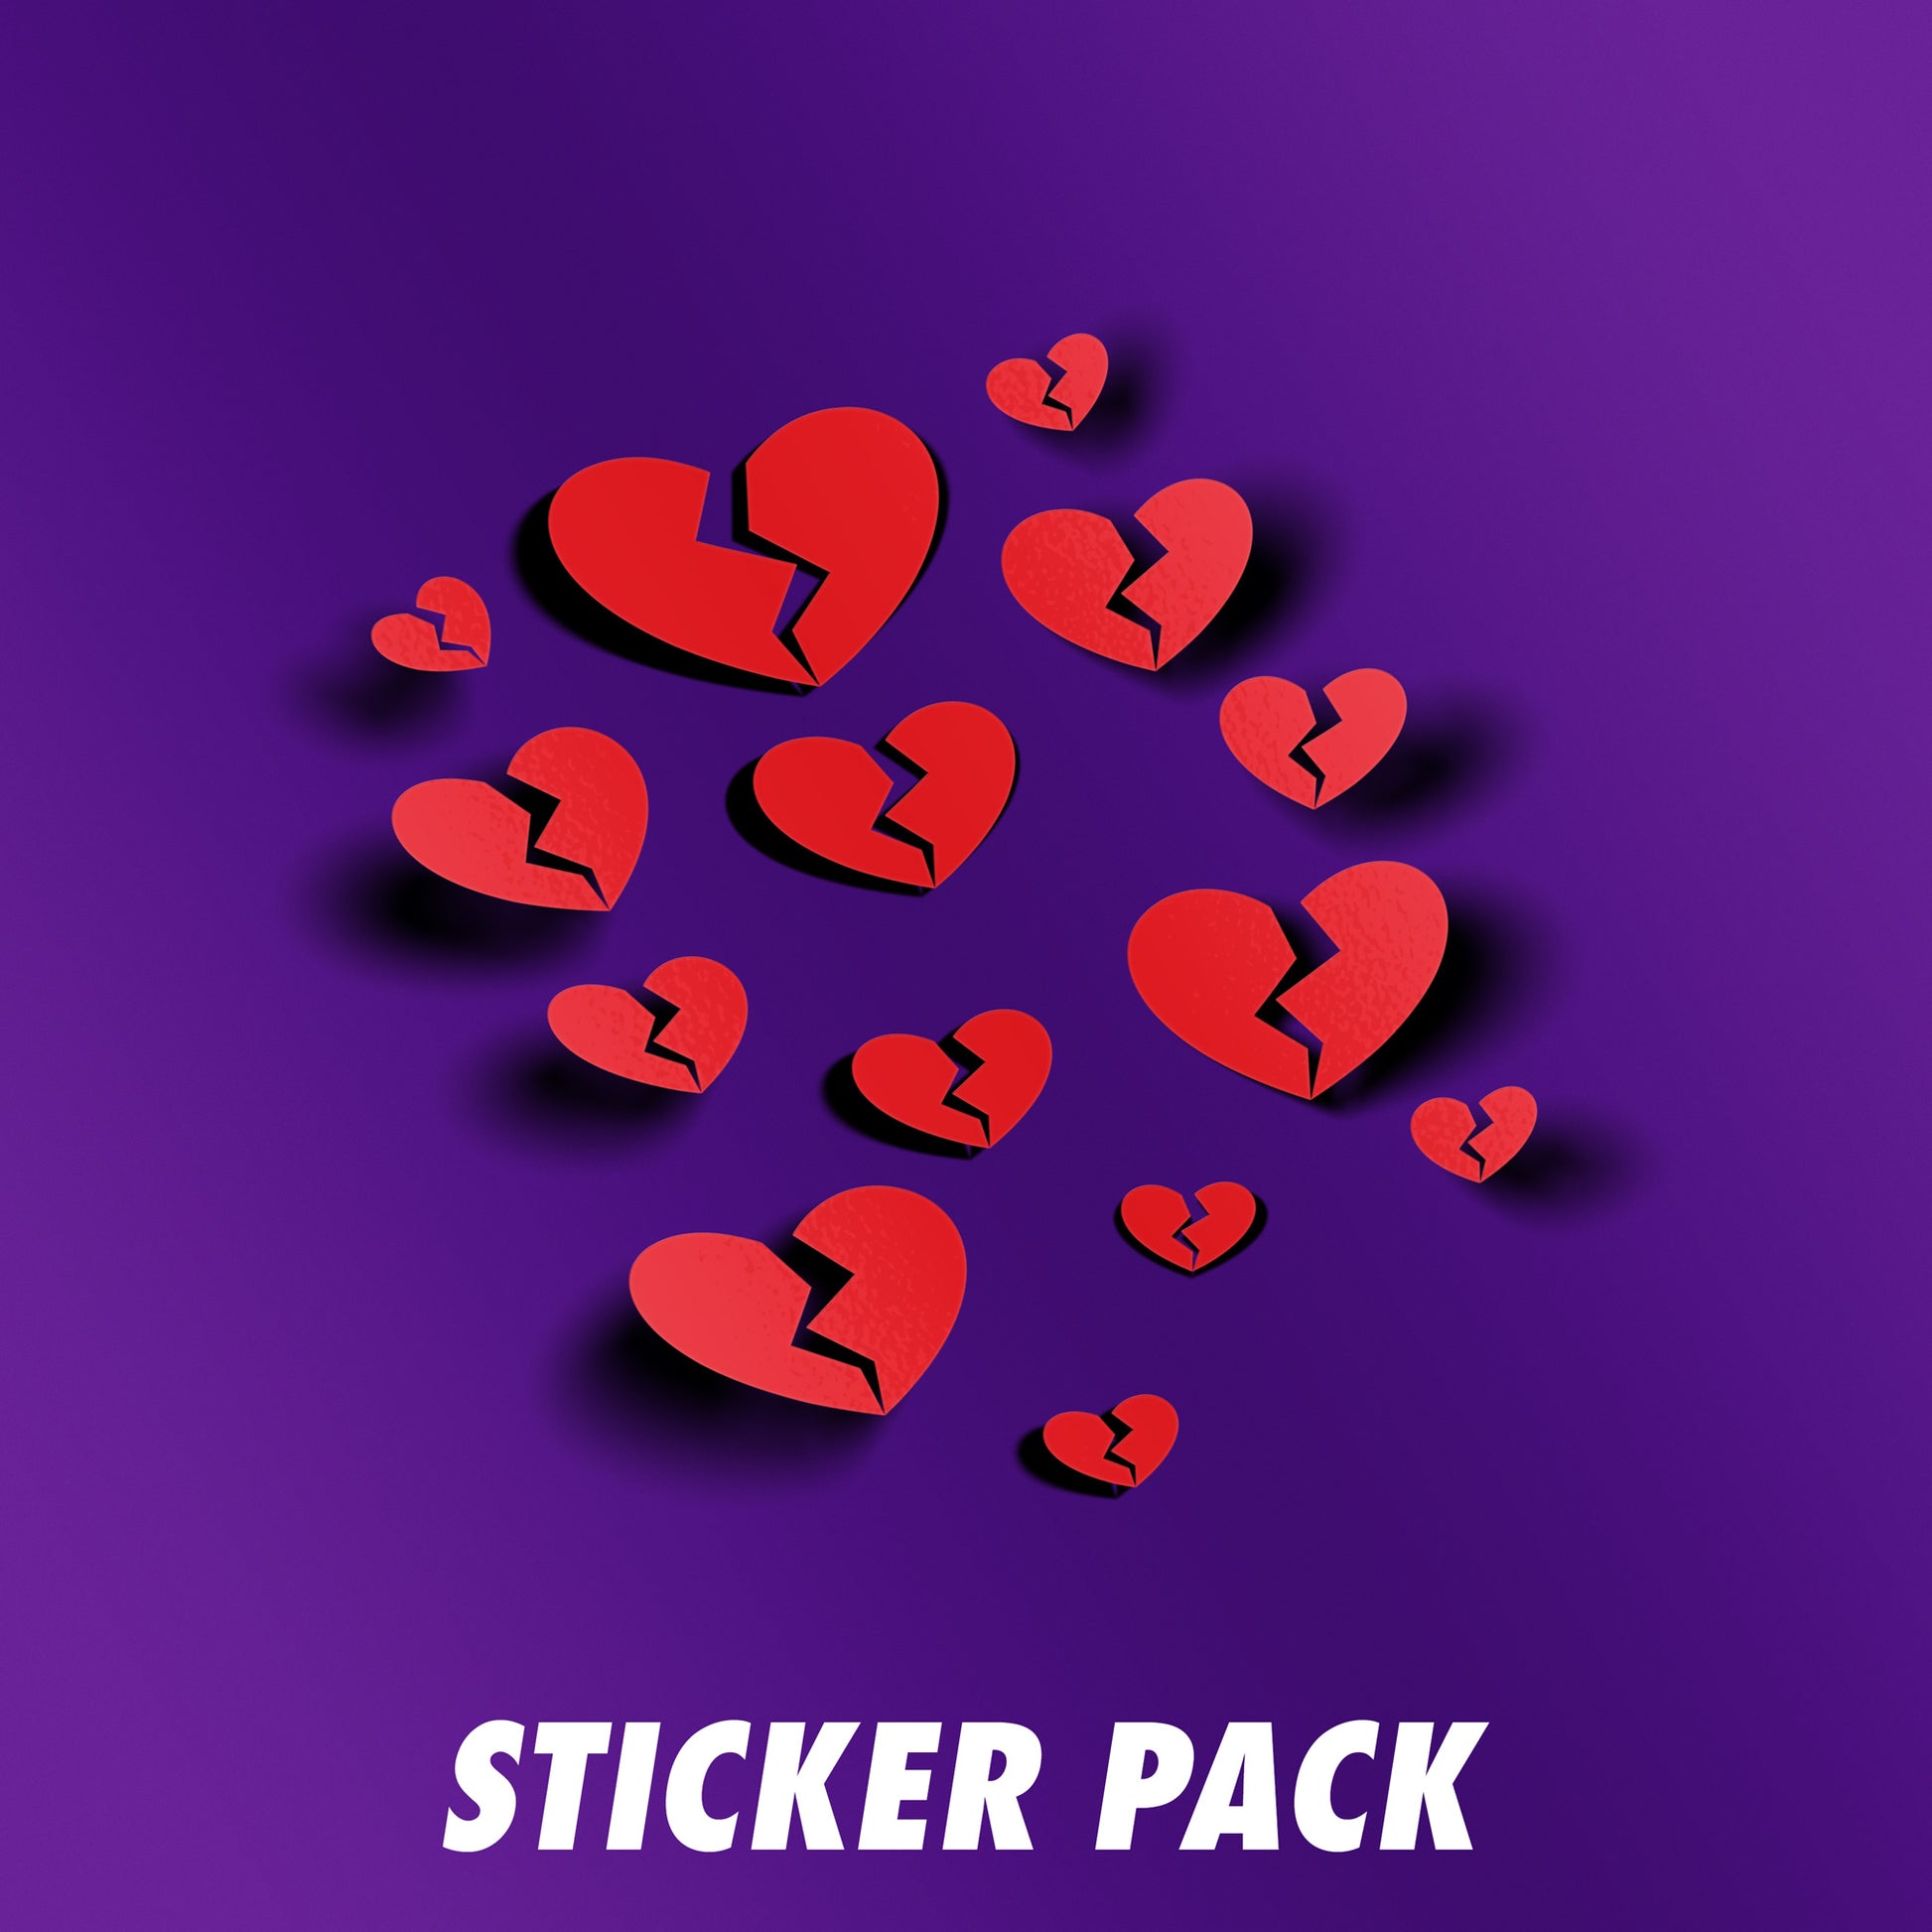 Broken Hearts Die-cut Sticker Pack - VINYL HOUZE